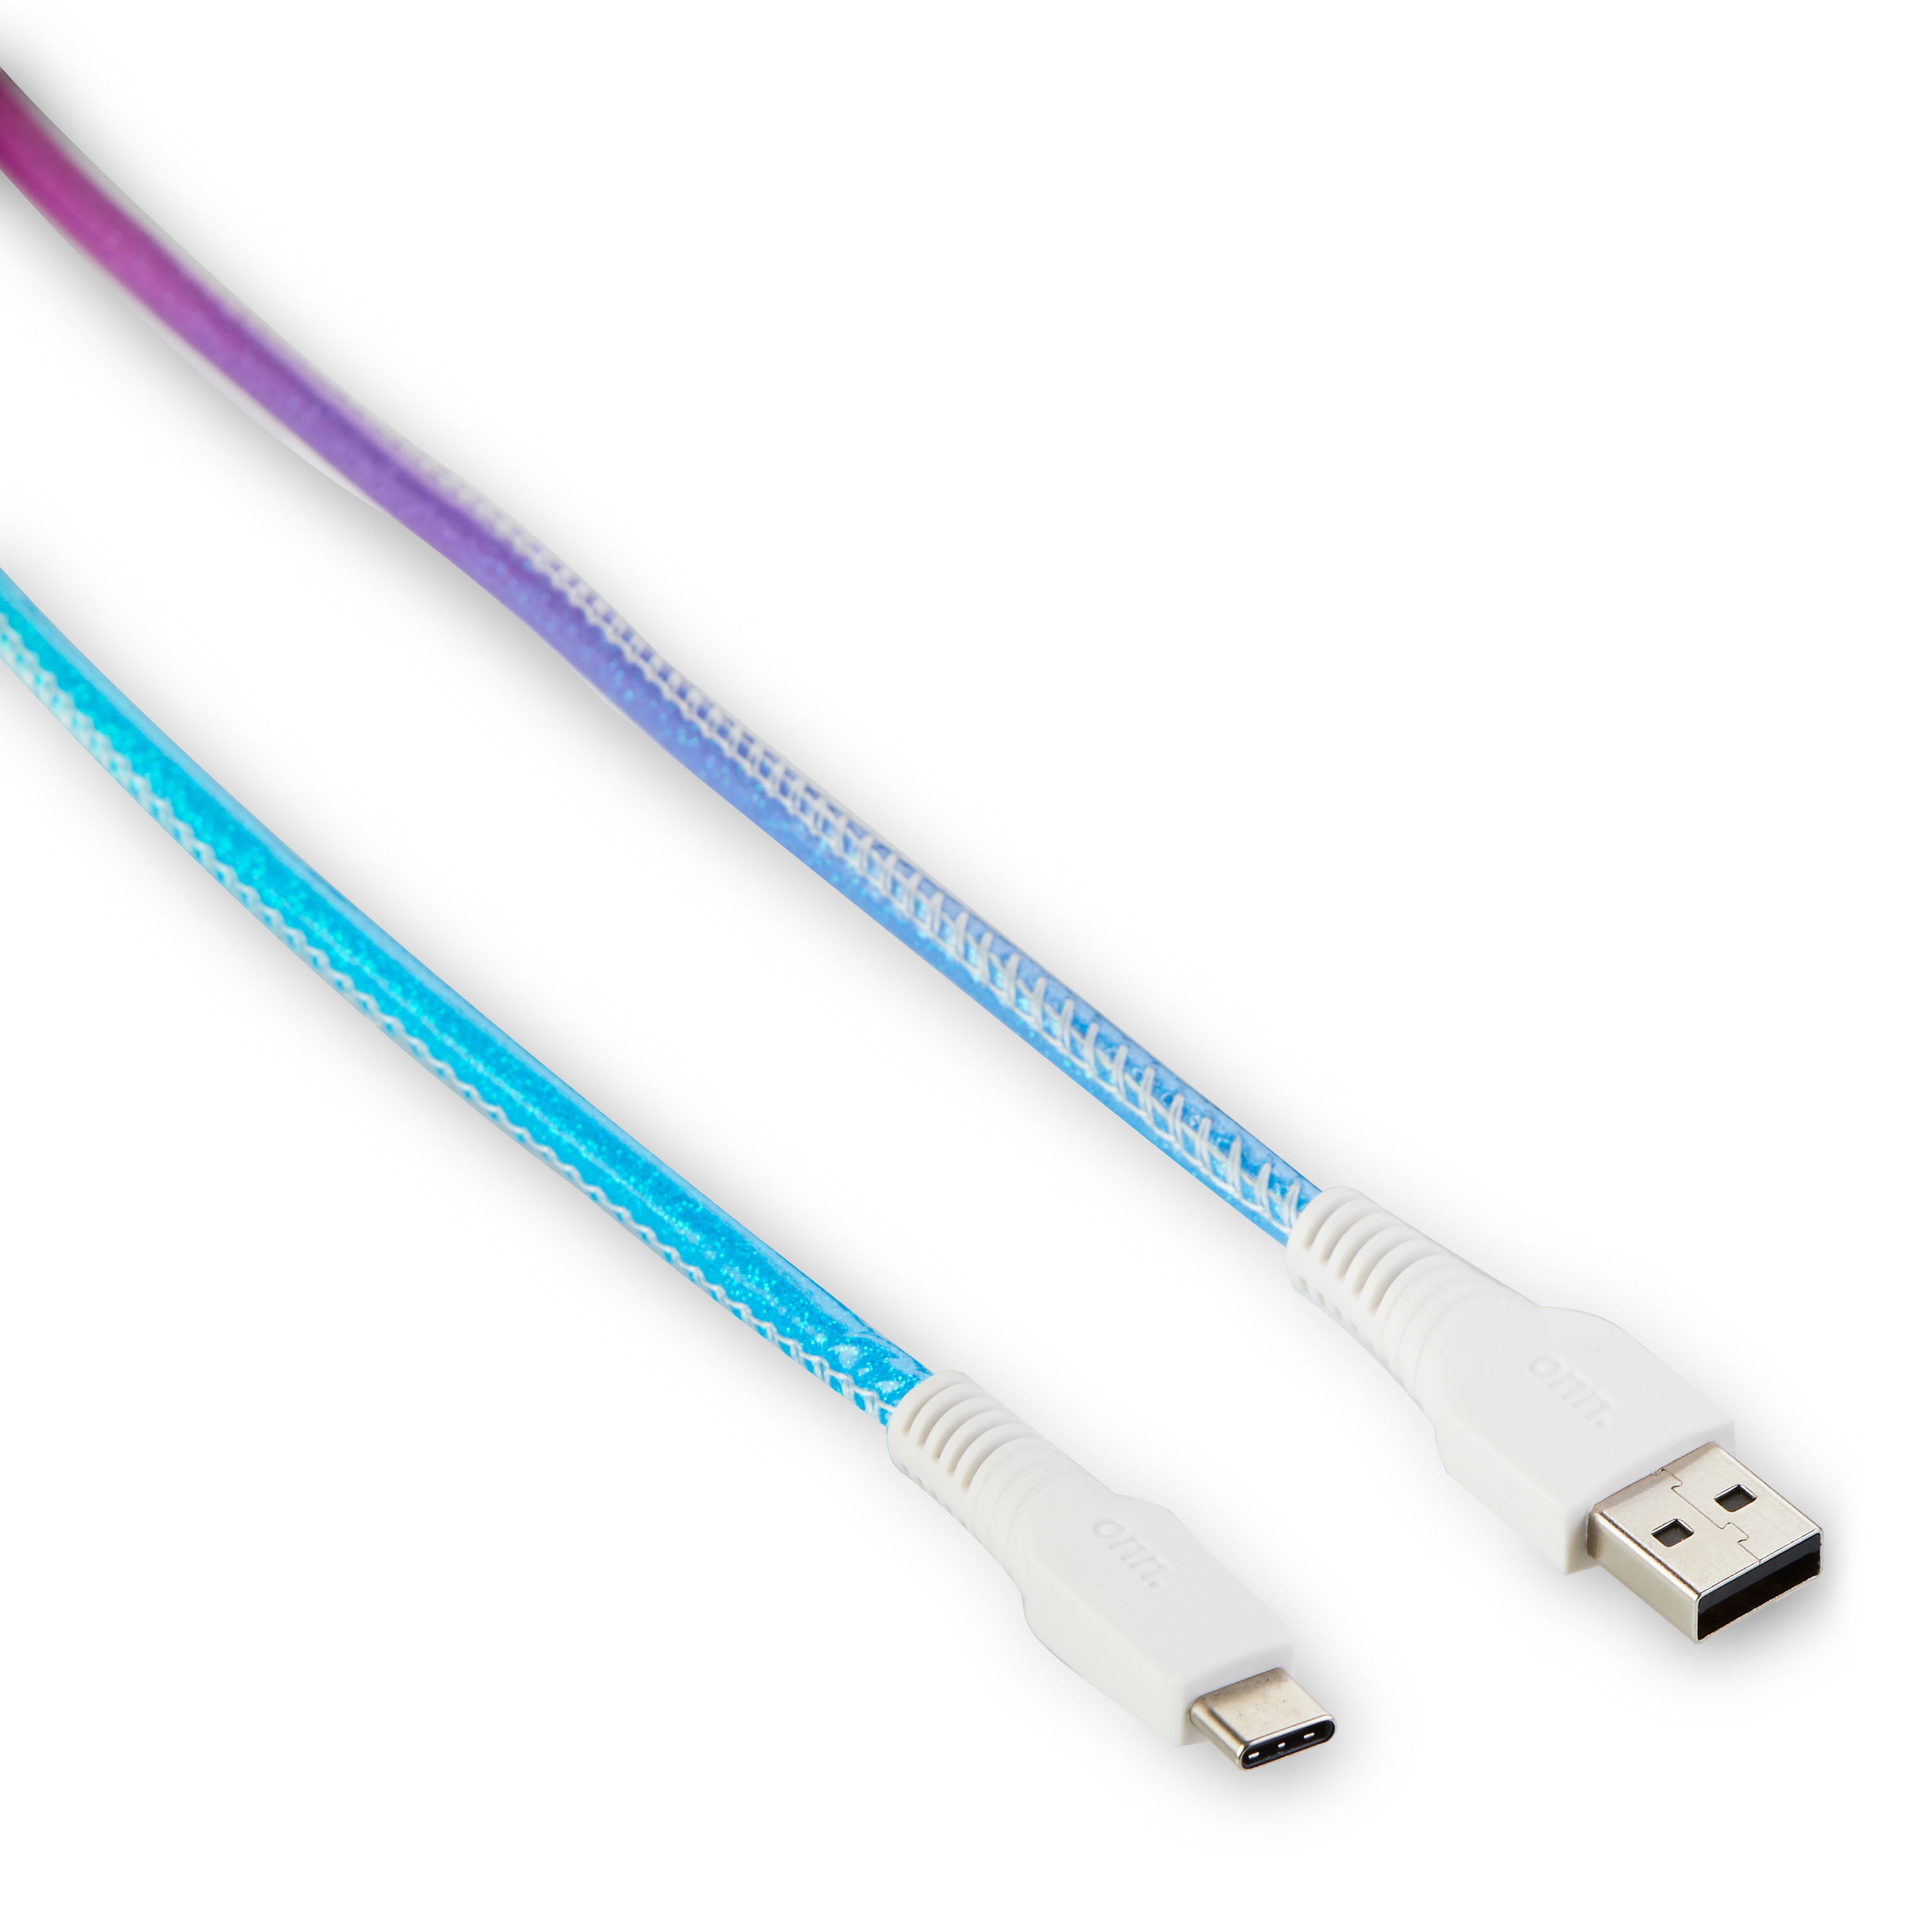 onn. USB to USB-C Glitter Cable, 6' Cord, Bright Multi-Color 